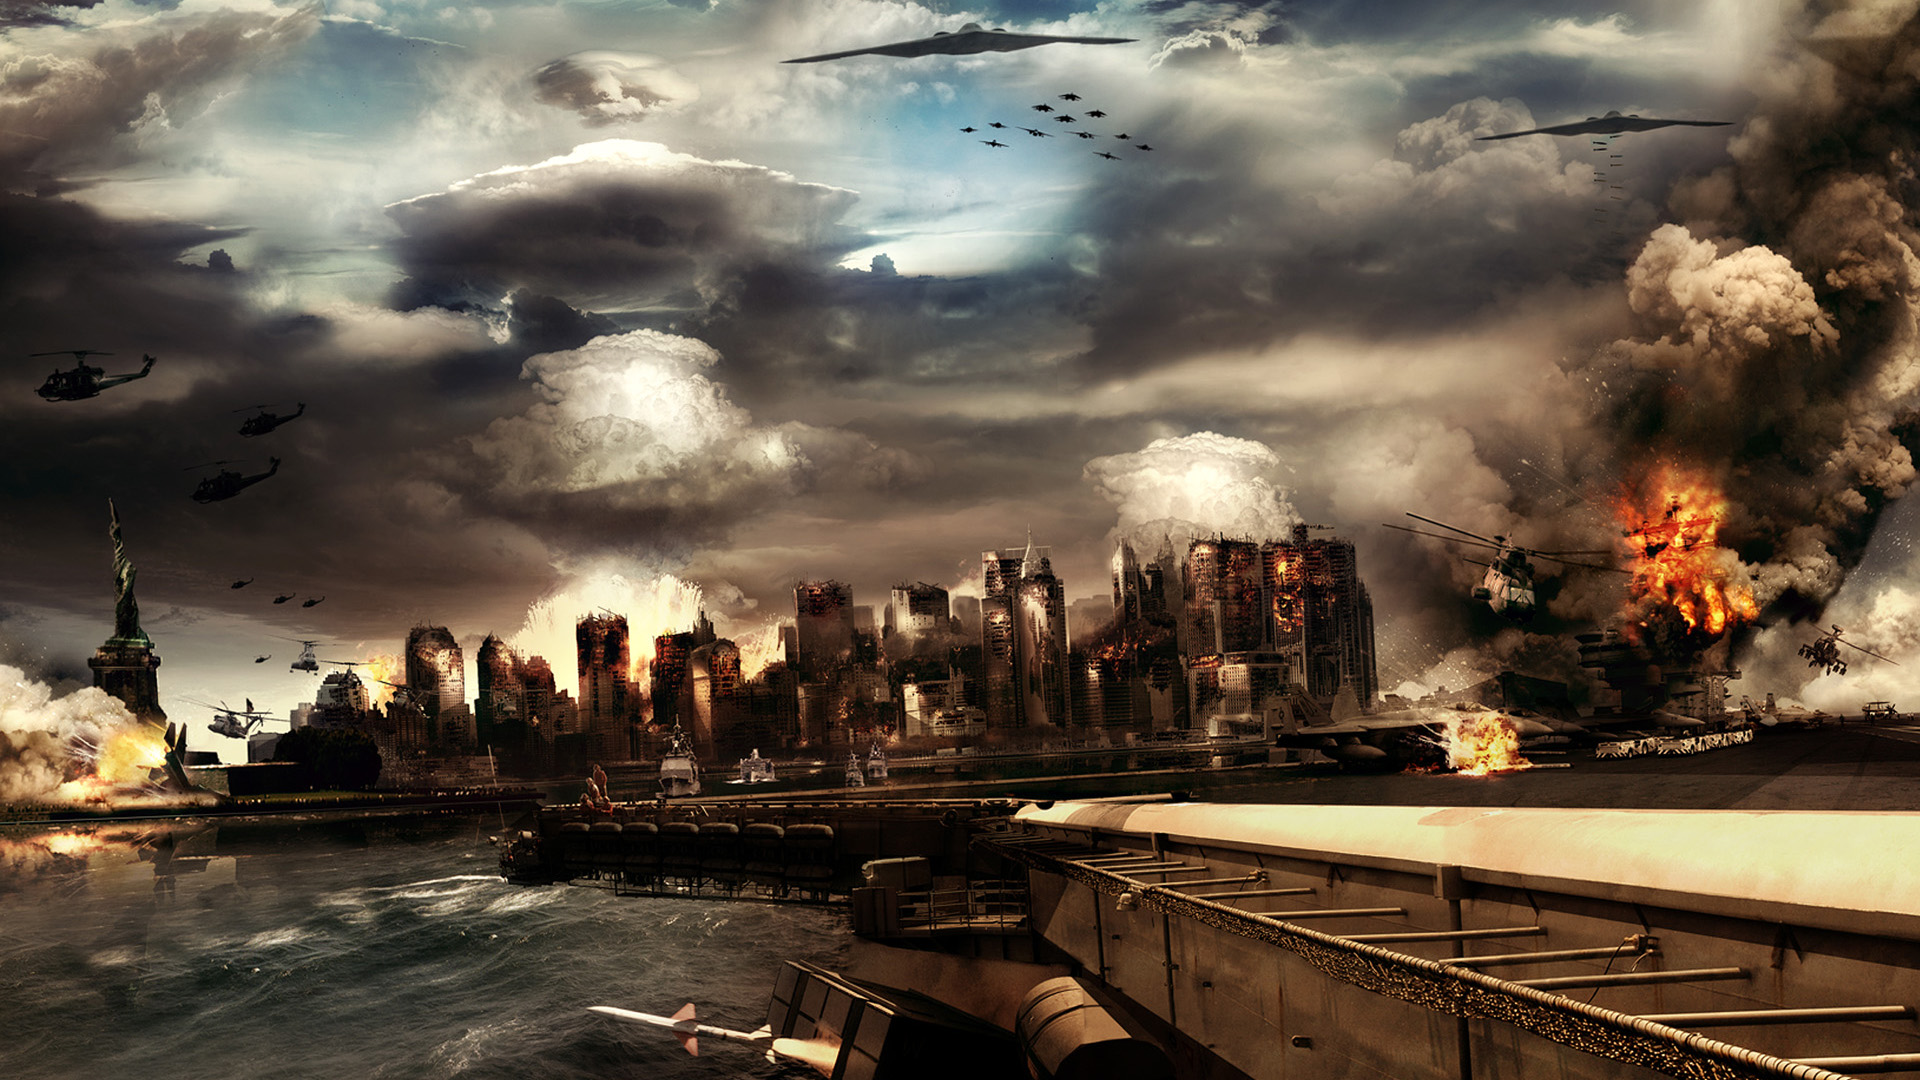 apocalypse - doomsday destruction Wallpaper (31051742) - Fanpop